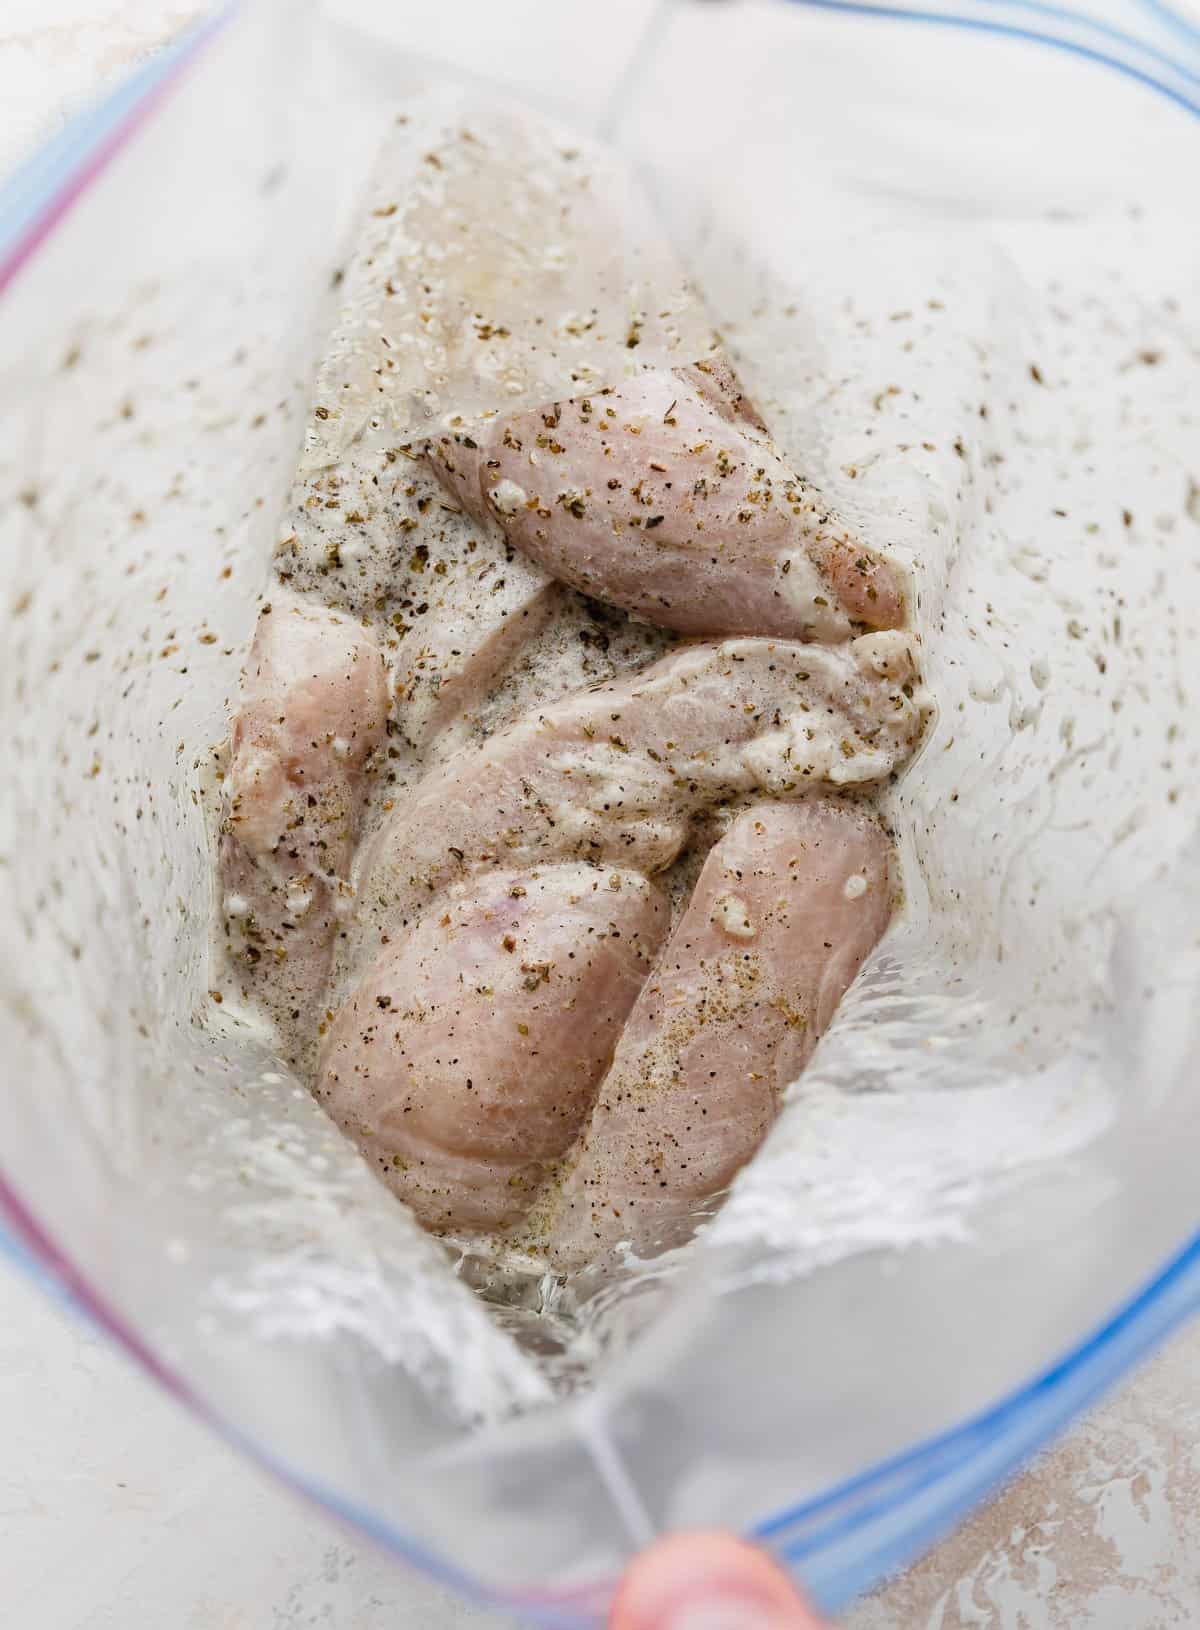 Chicken gyro marinade in a ziplock bag with chicken tenders.